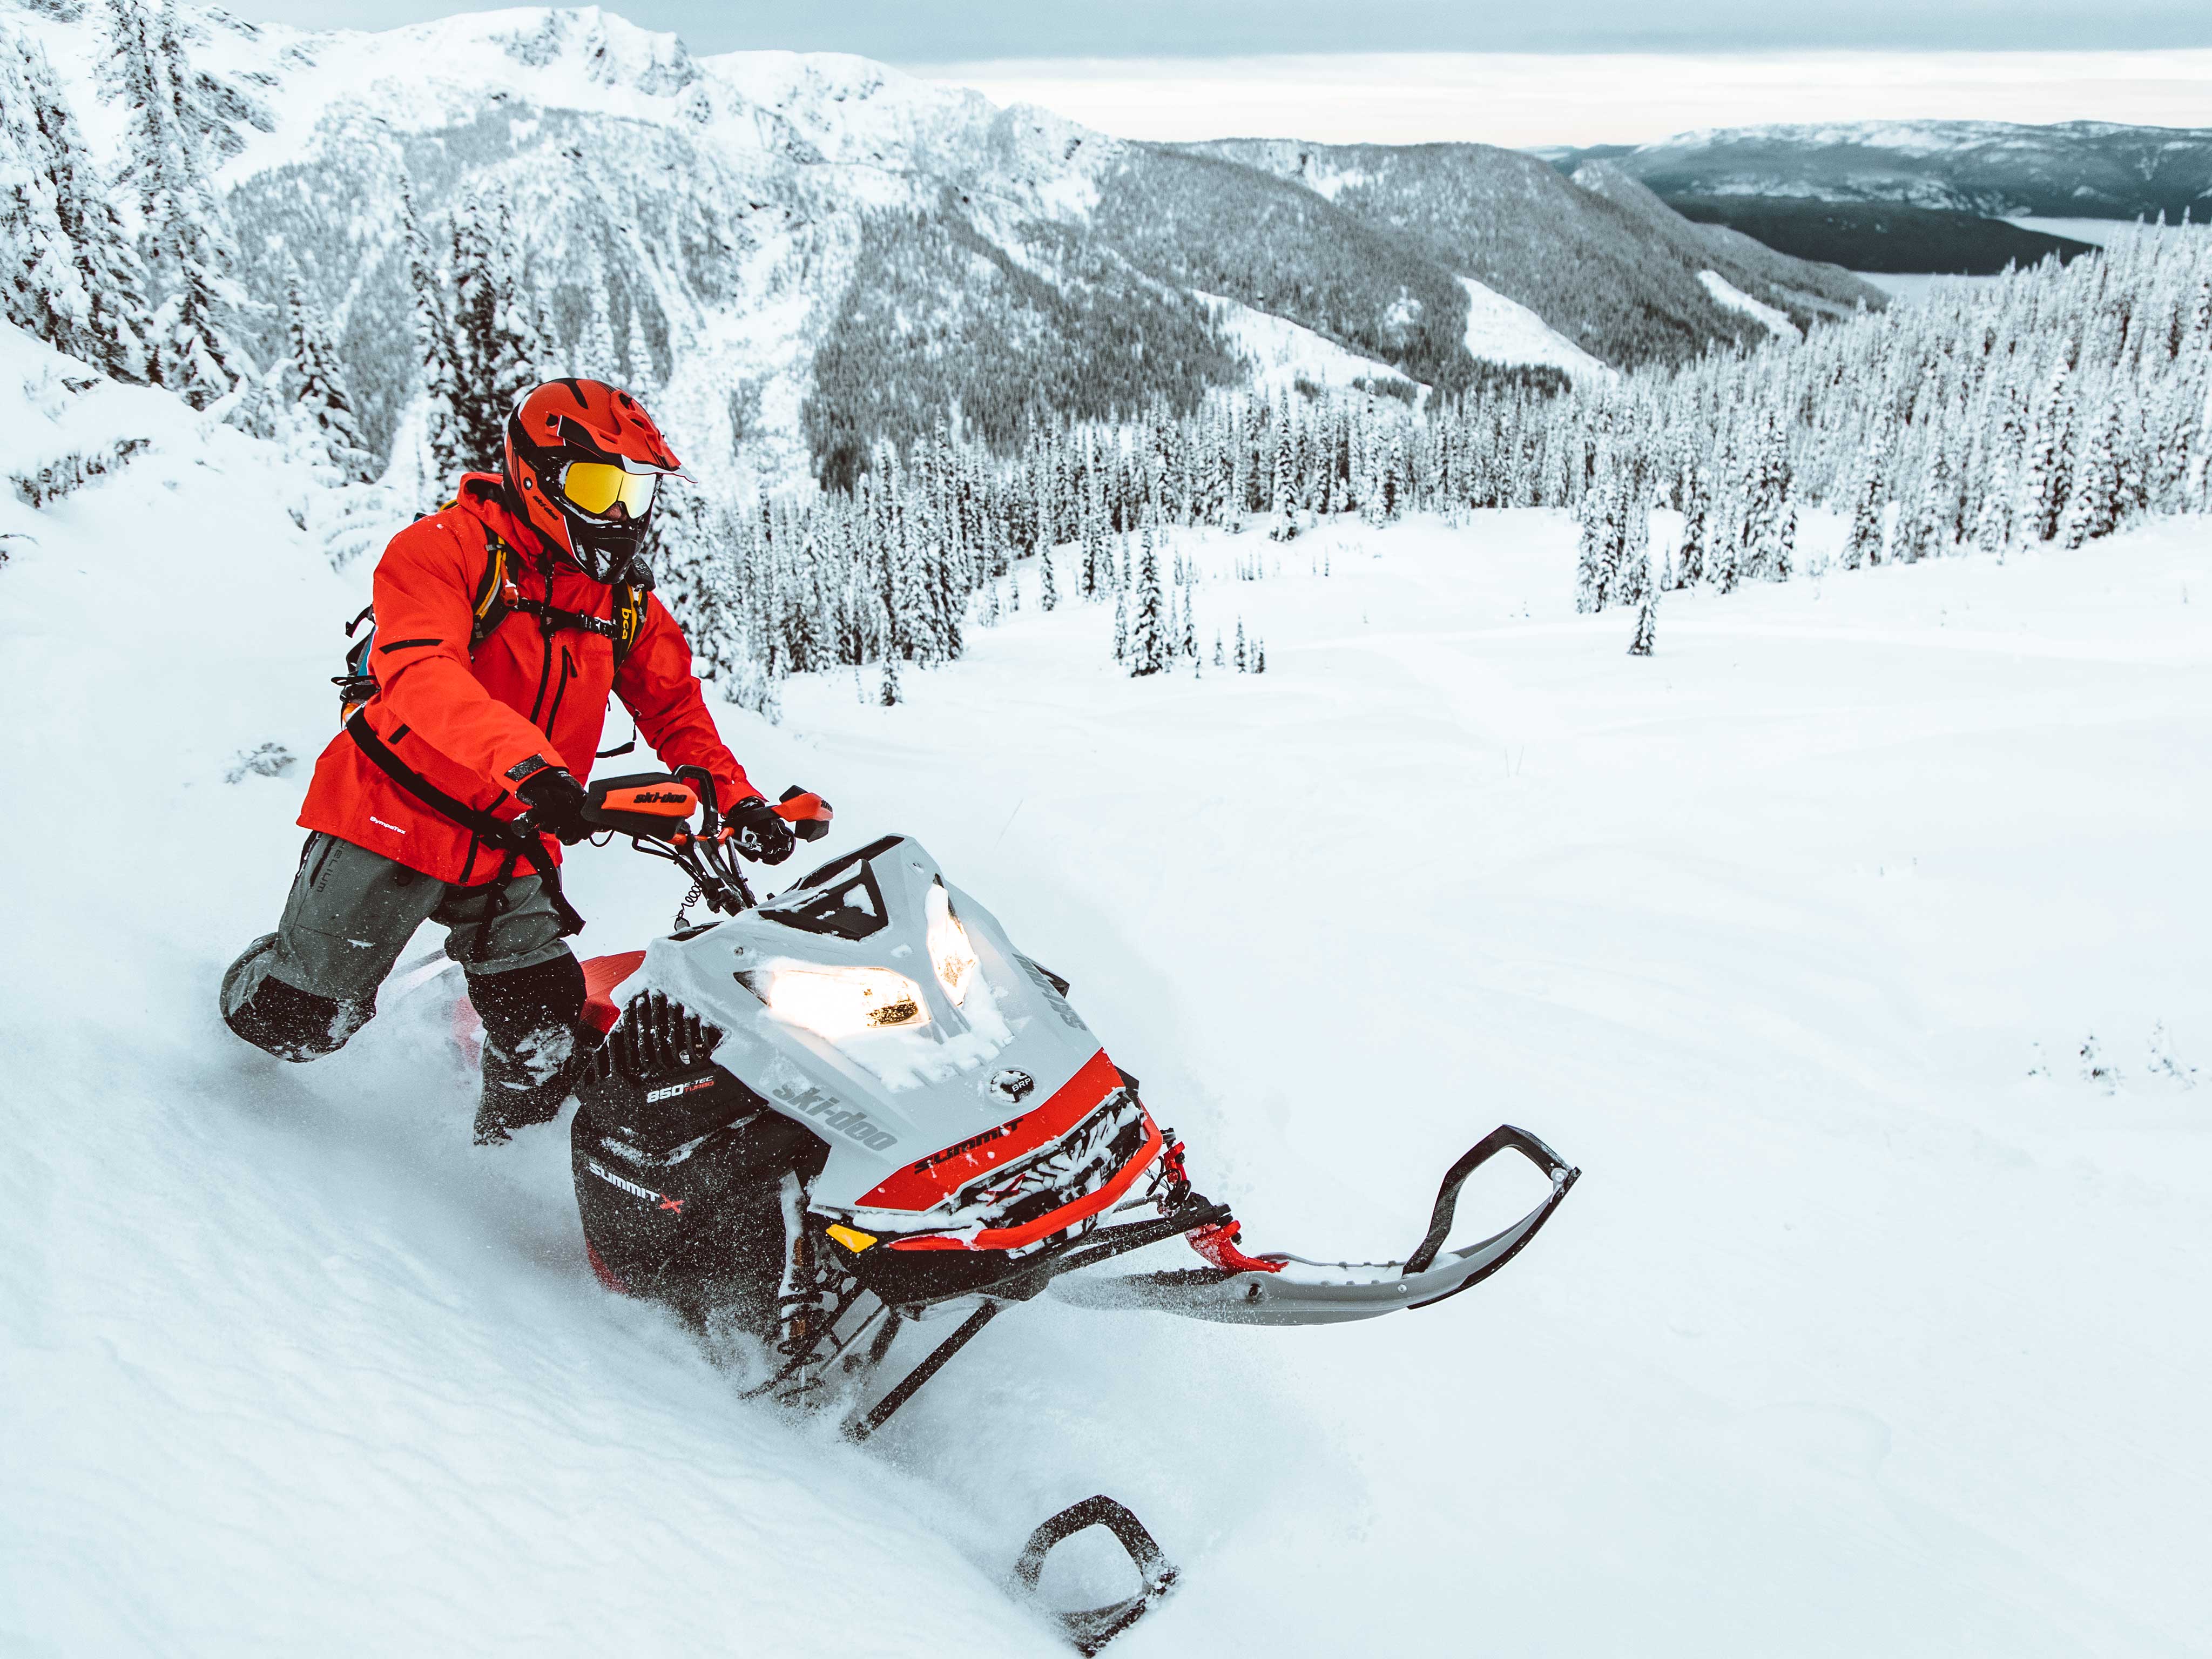 Tony Jenkins, Ski-Doo ambassador, riding his snowmobile in deep snow